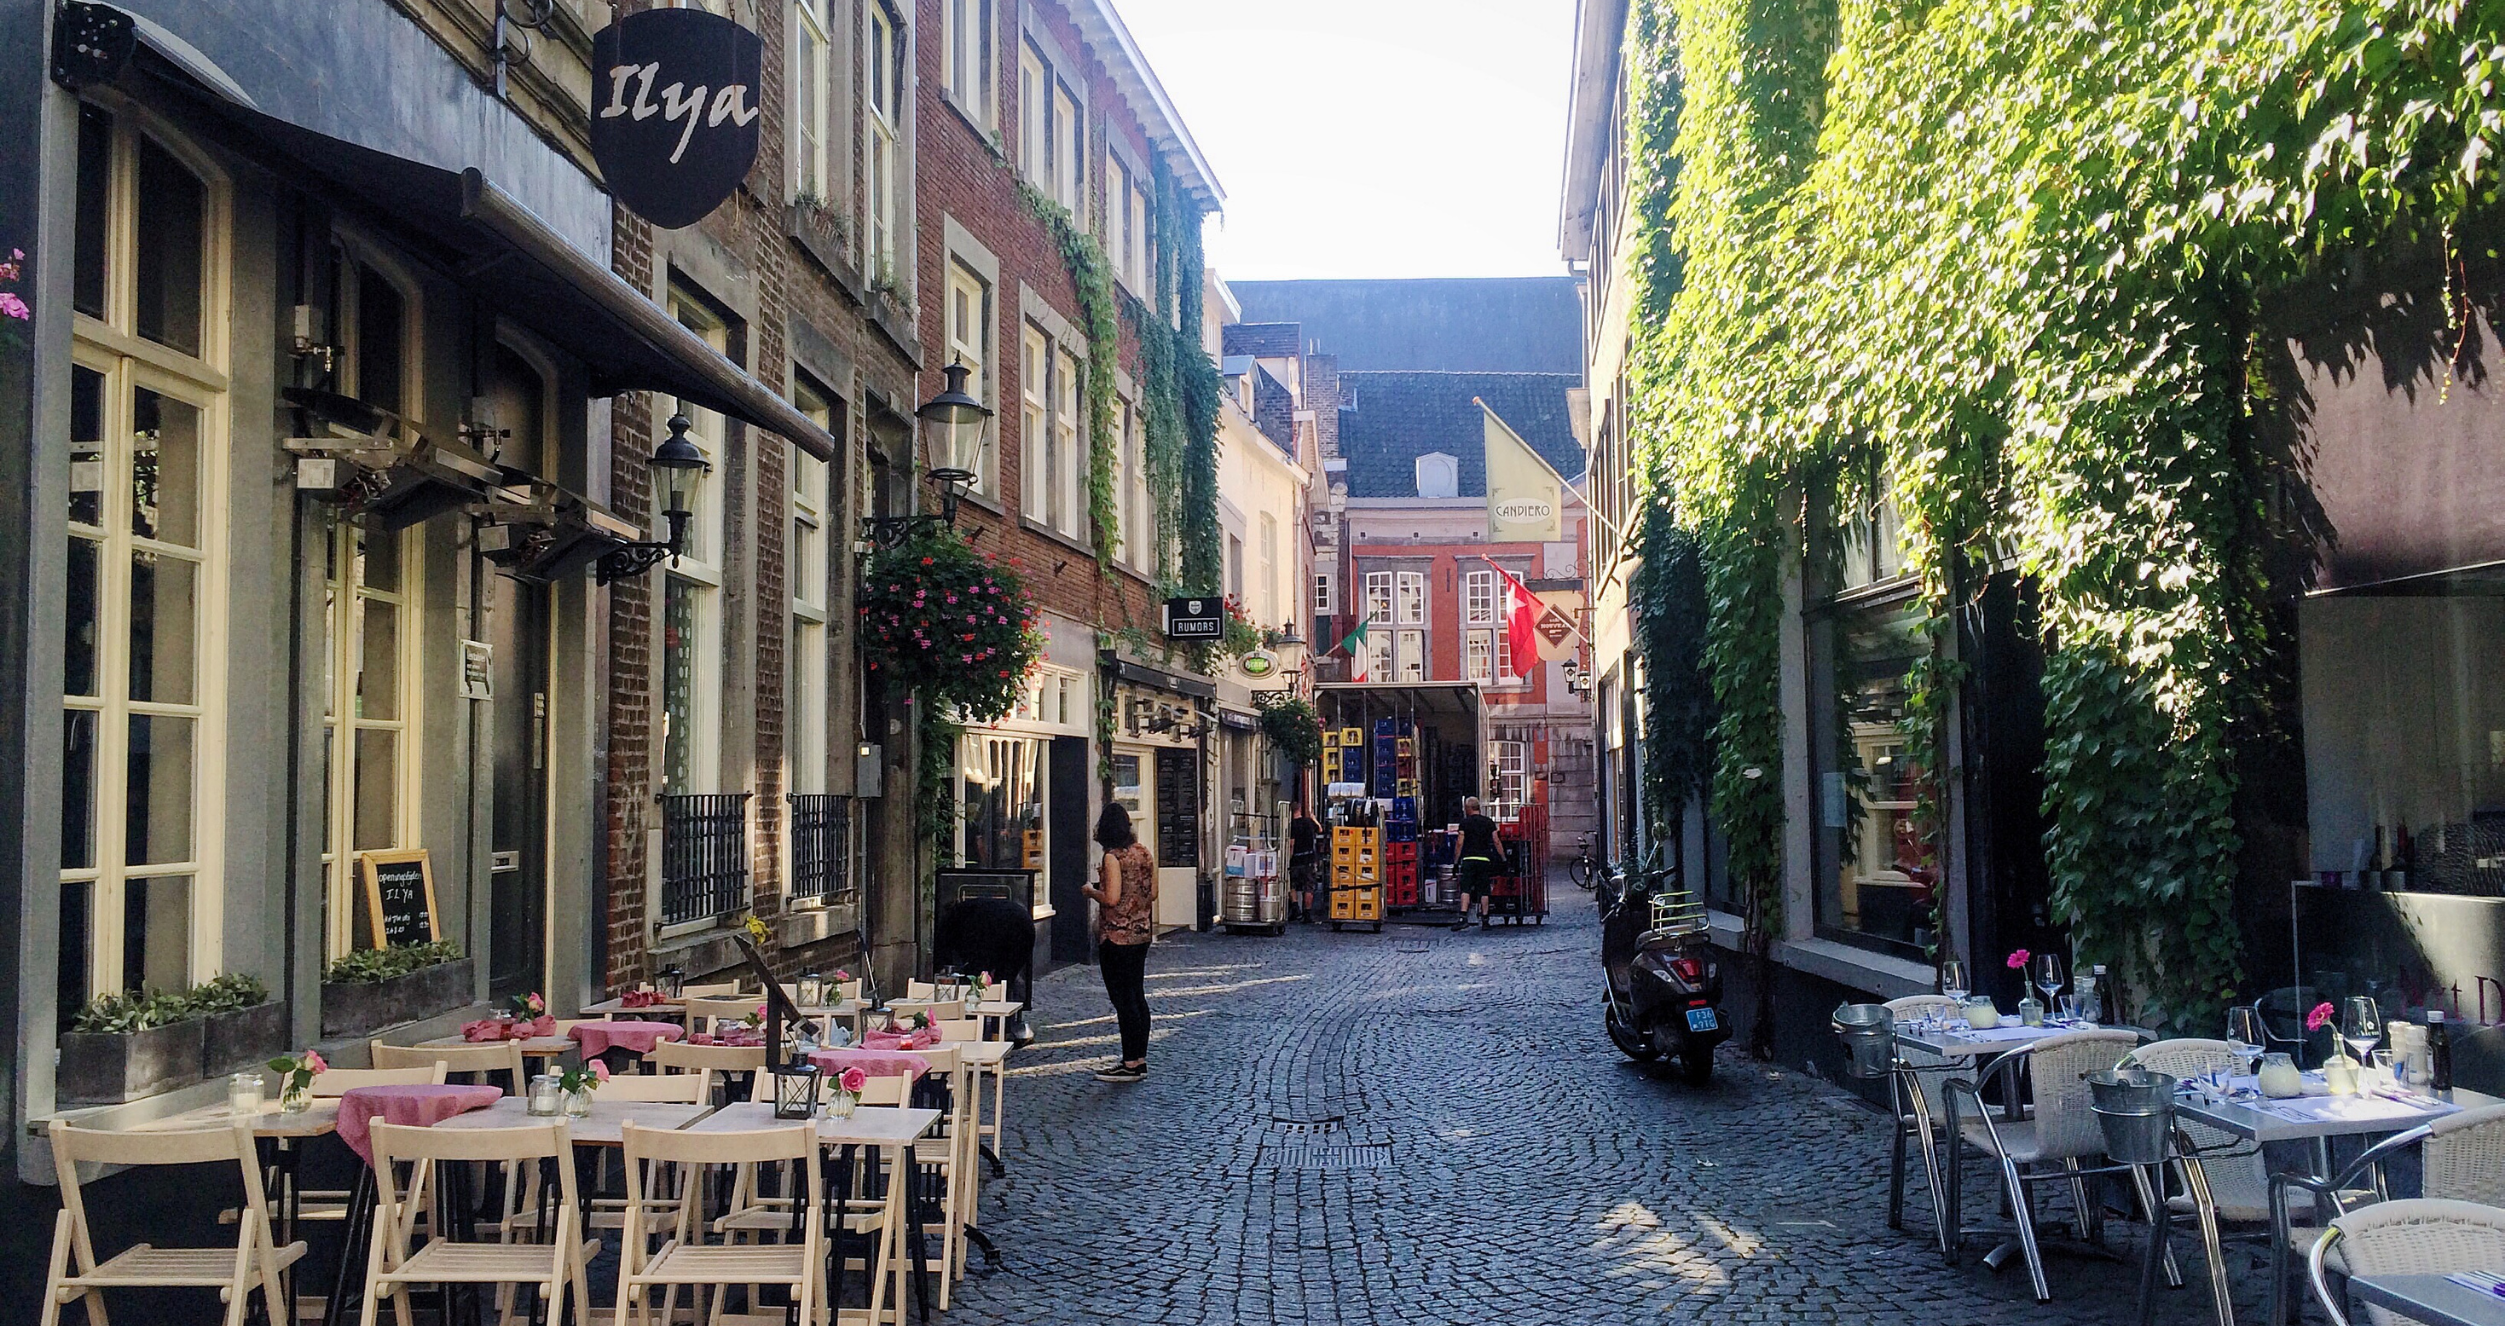 A narrow street in Maastricht